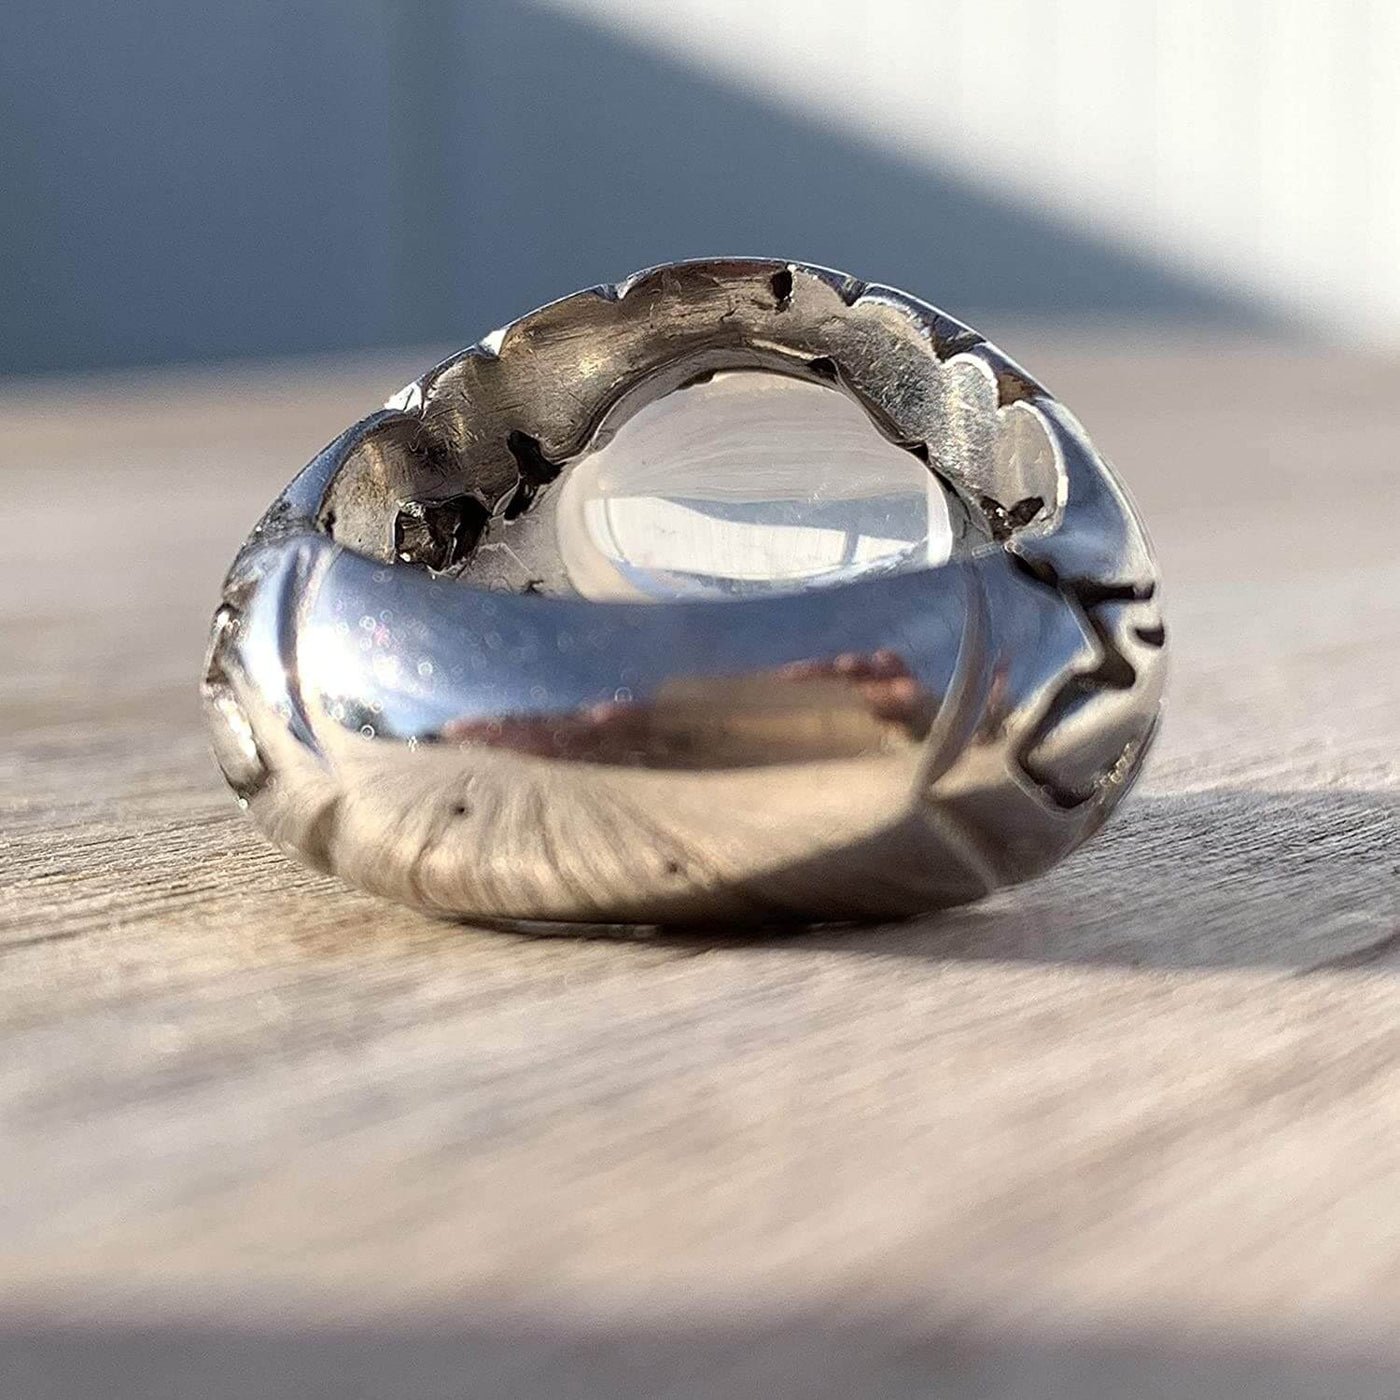 Dur e Najaf Ring Silver | خاتم در النجف الاصلي | AlAliGems | Genuine Dur E Najaf Stone Ring | Silver 925 Size 9.75 - Al Ali Gems